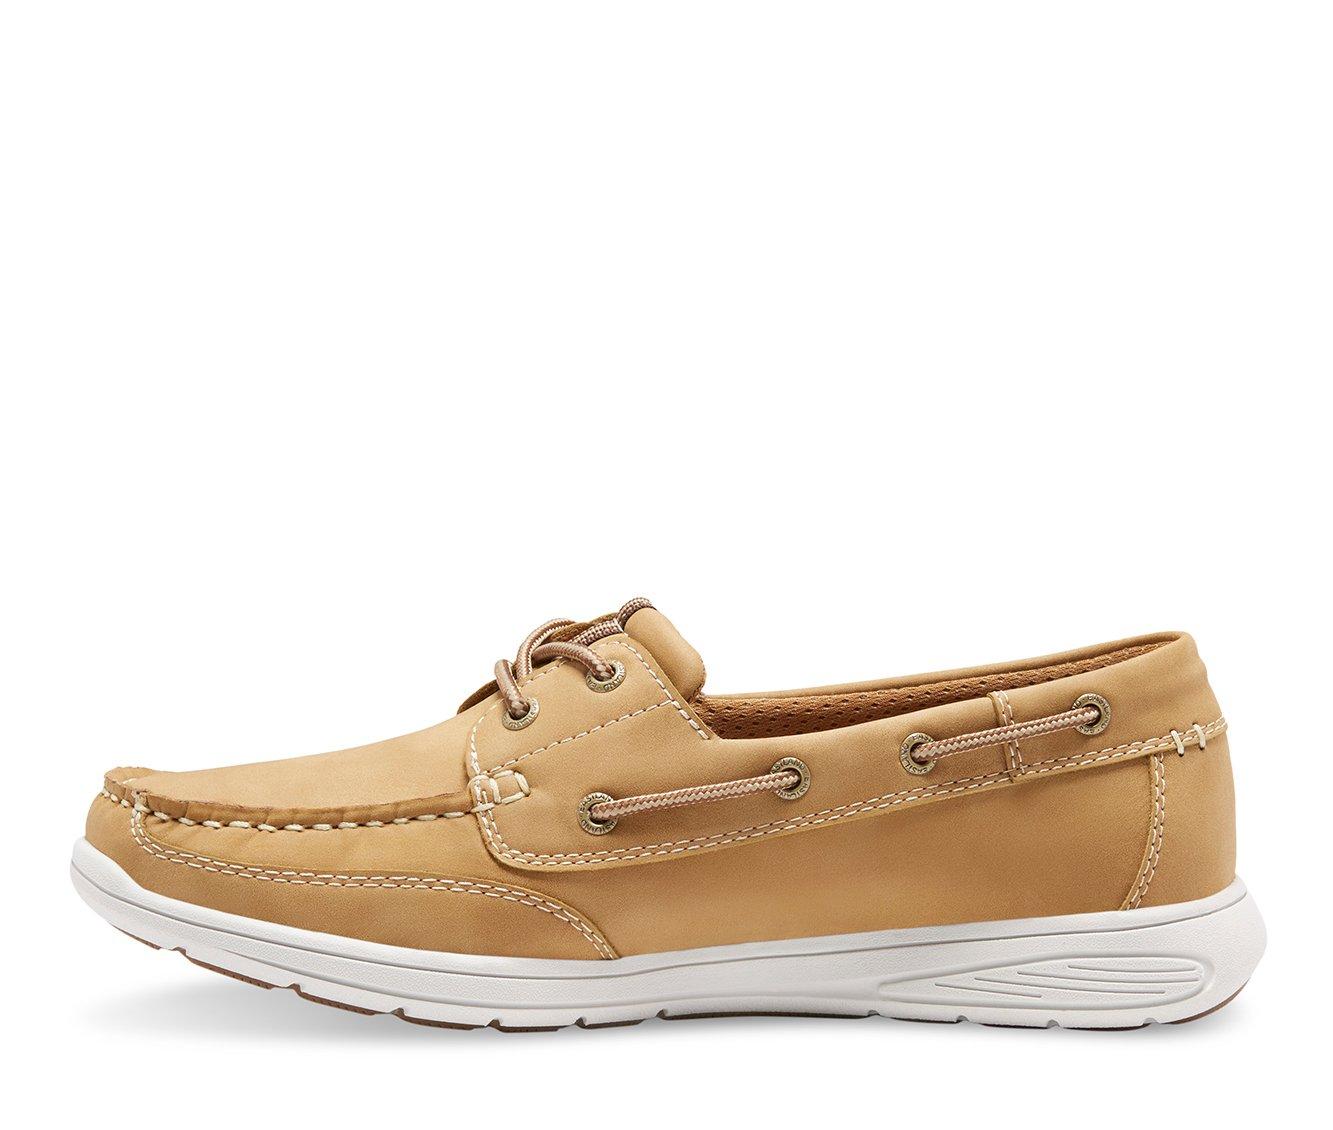 Men's Eastland Benton Boat Shoes